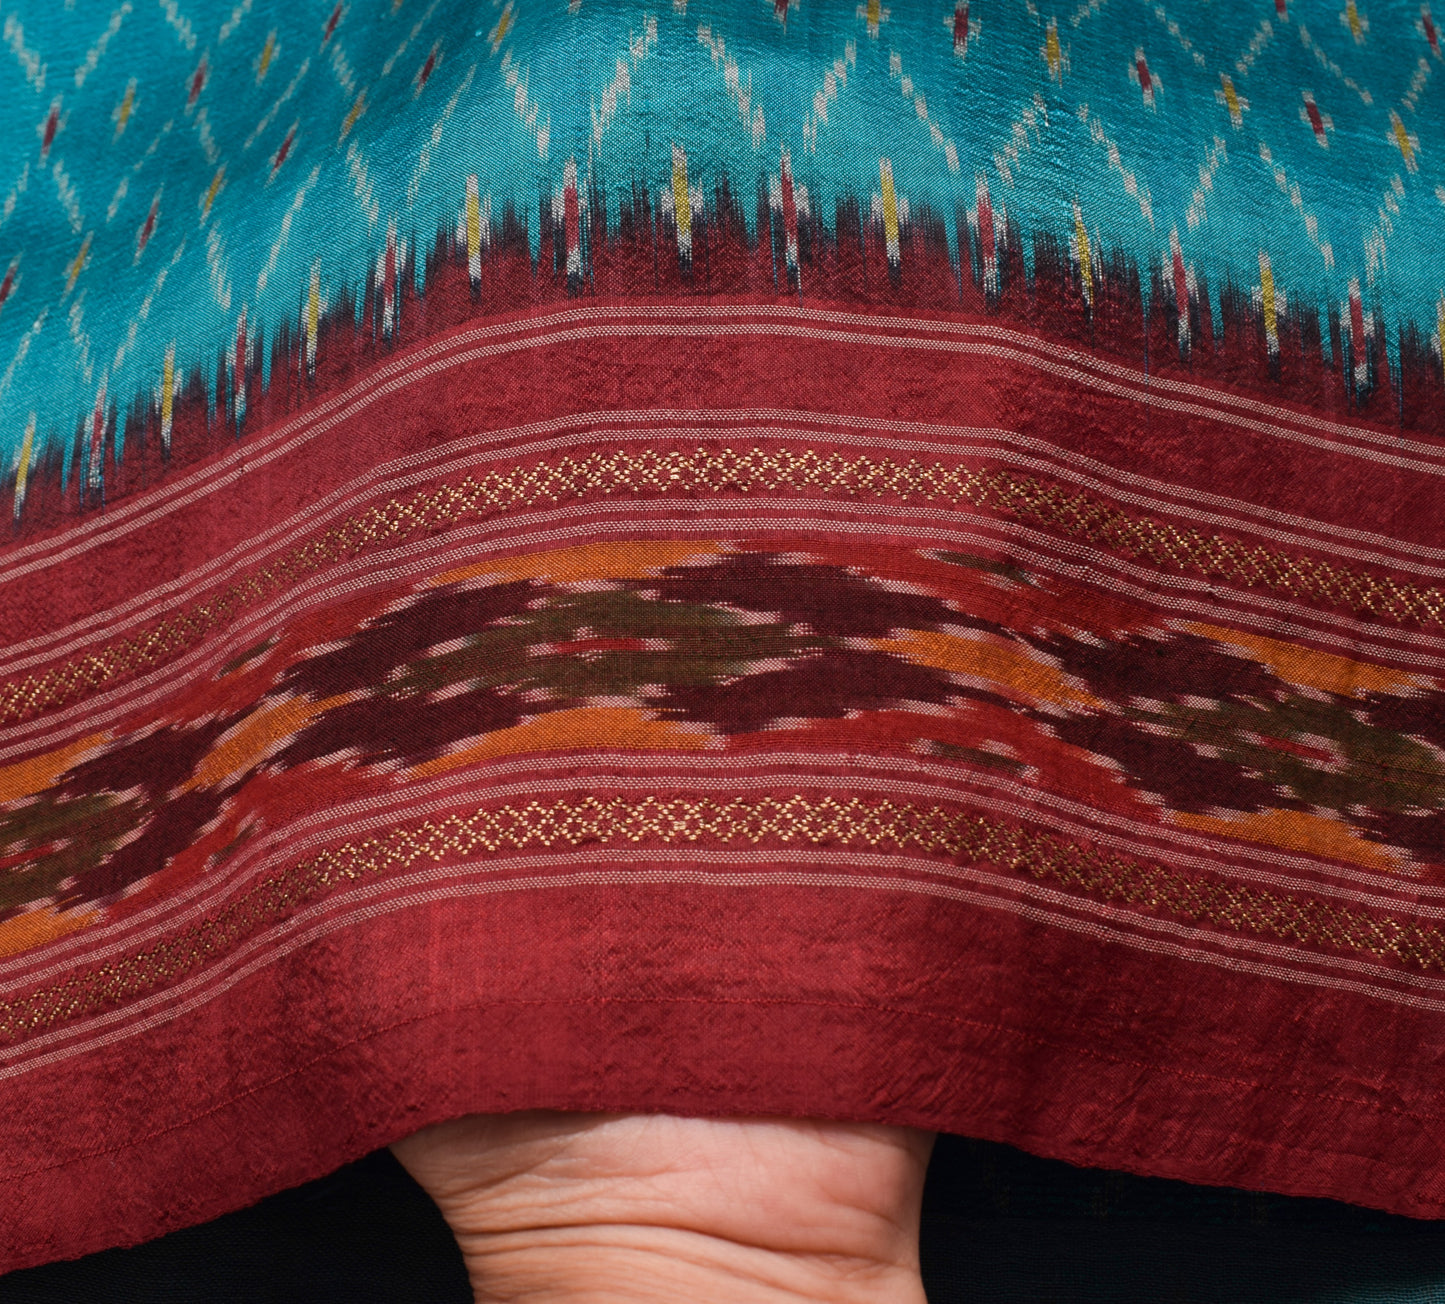 Sushila Vintage Blue Scrap Saree 100% Pure Silk Hand Woven Patola Sari Fabric